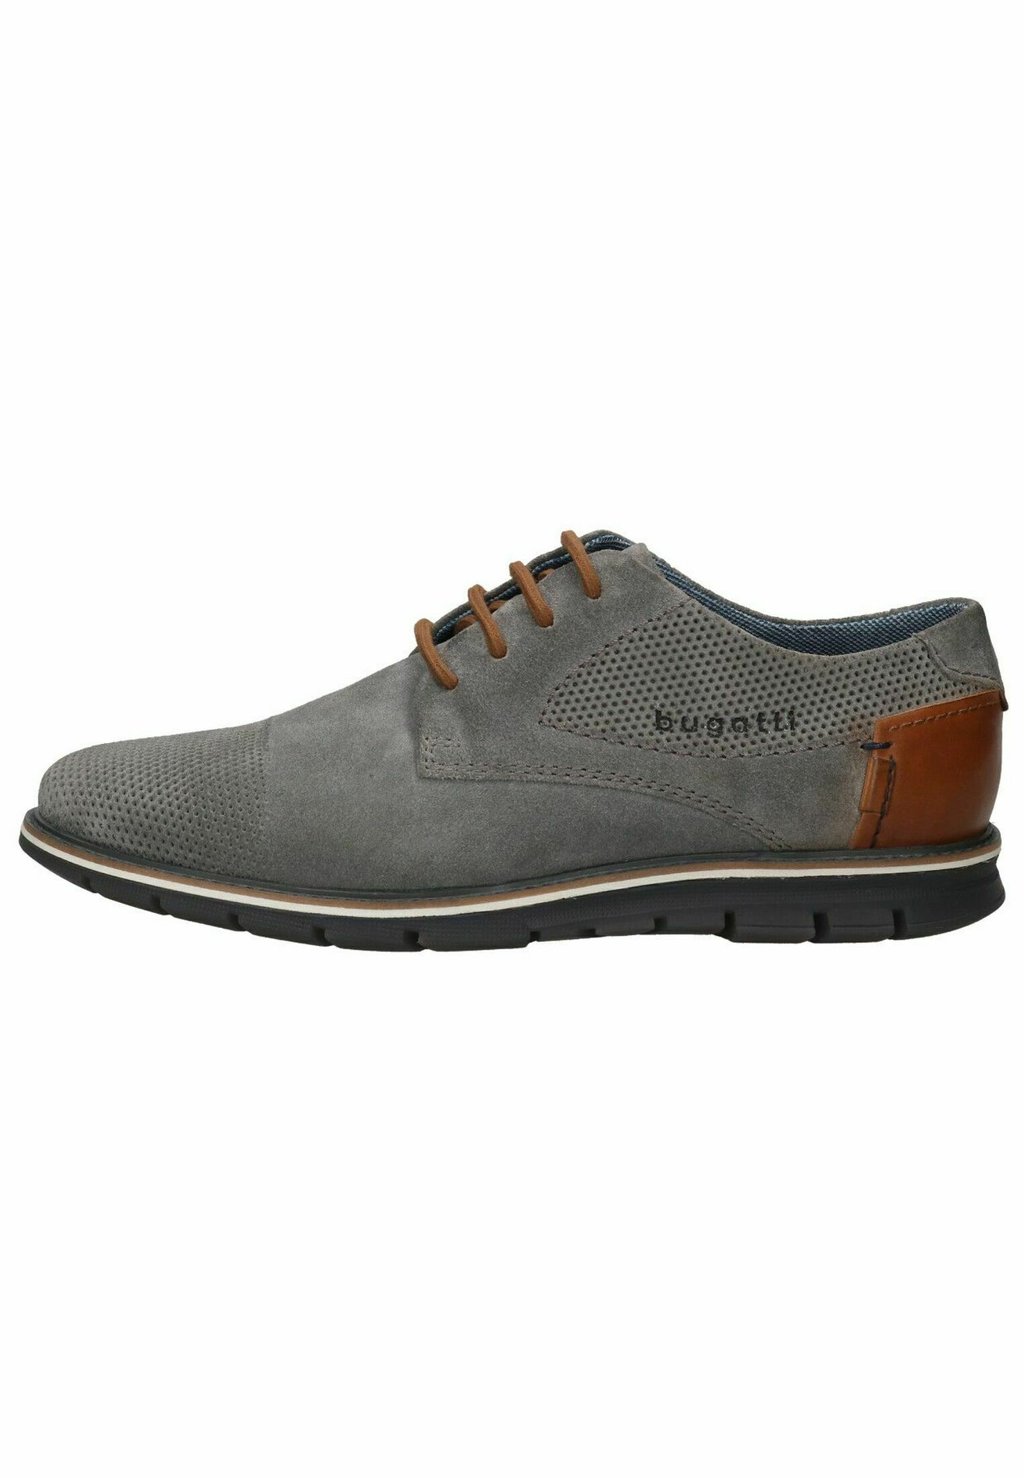 Спортивные туфли на шнуровке bugatti, цвет grey спортивные туфли на шнуровке simone comfort bugatti цвет dark blue